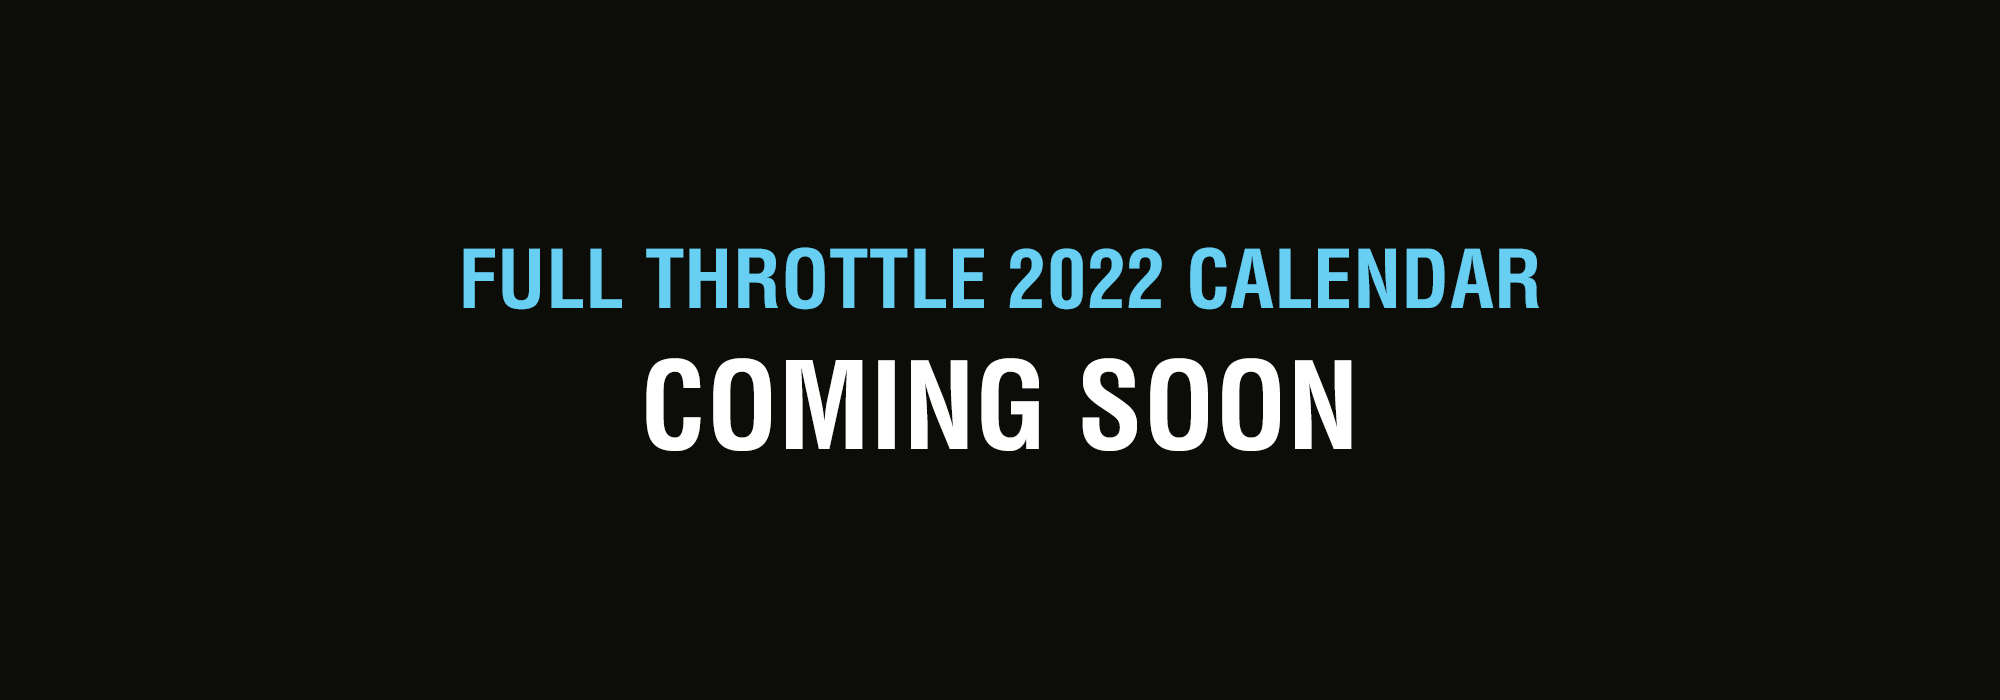 Full Throttle 2022 Calendar - Coming soon 